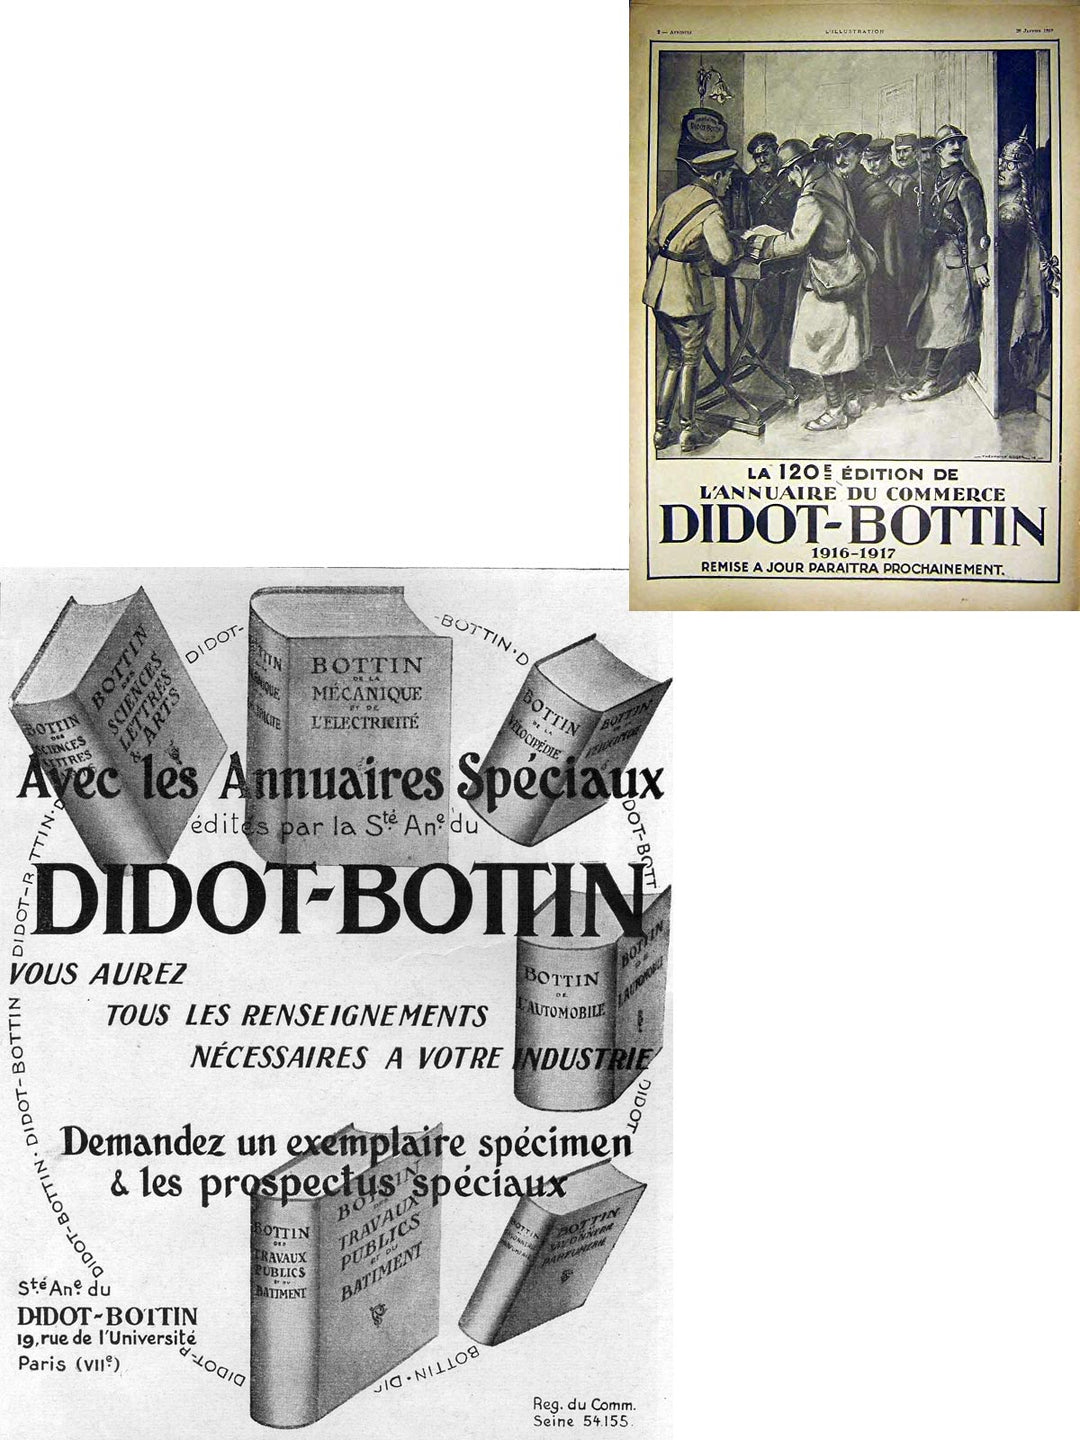 Antigua placa esmaltada Didot Bottin principios s. XX (87*14,5 cm)